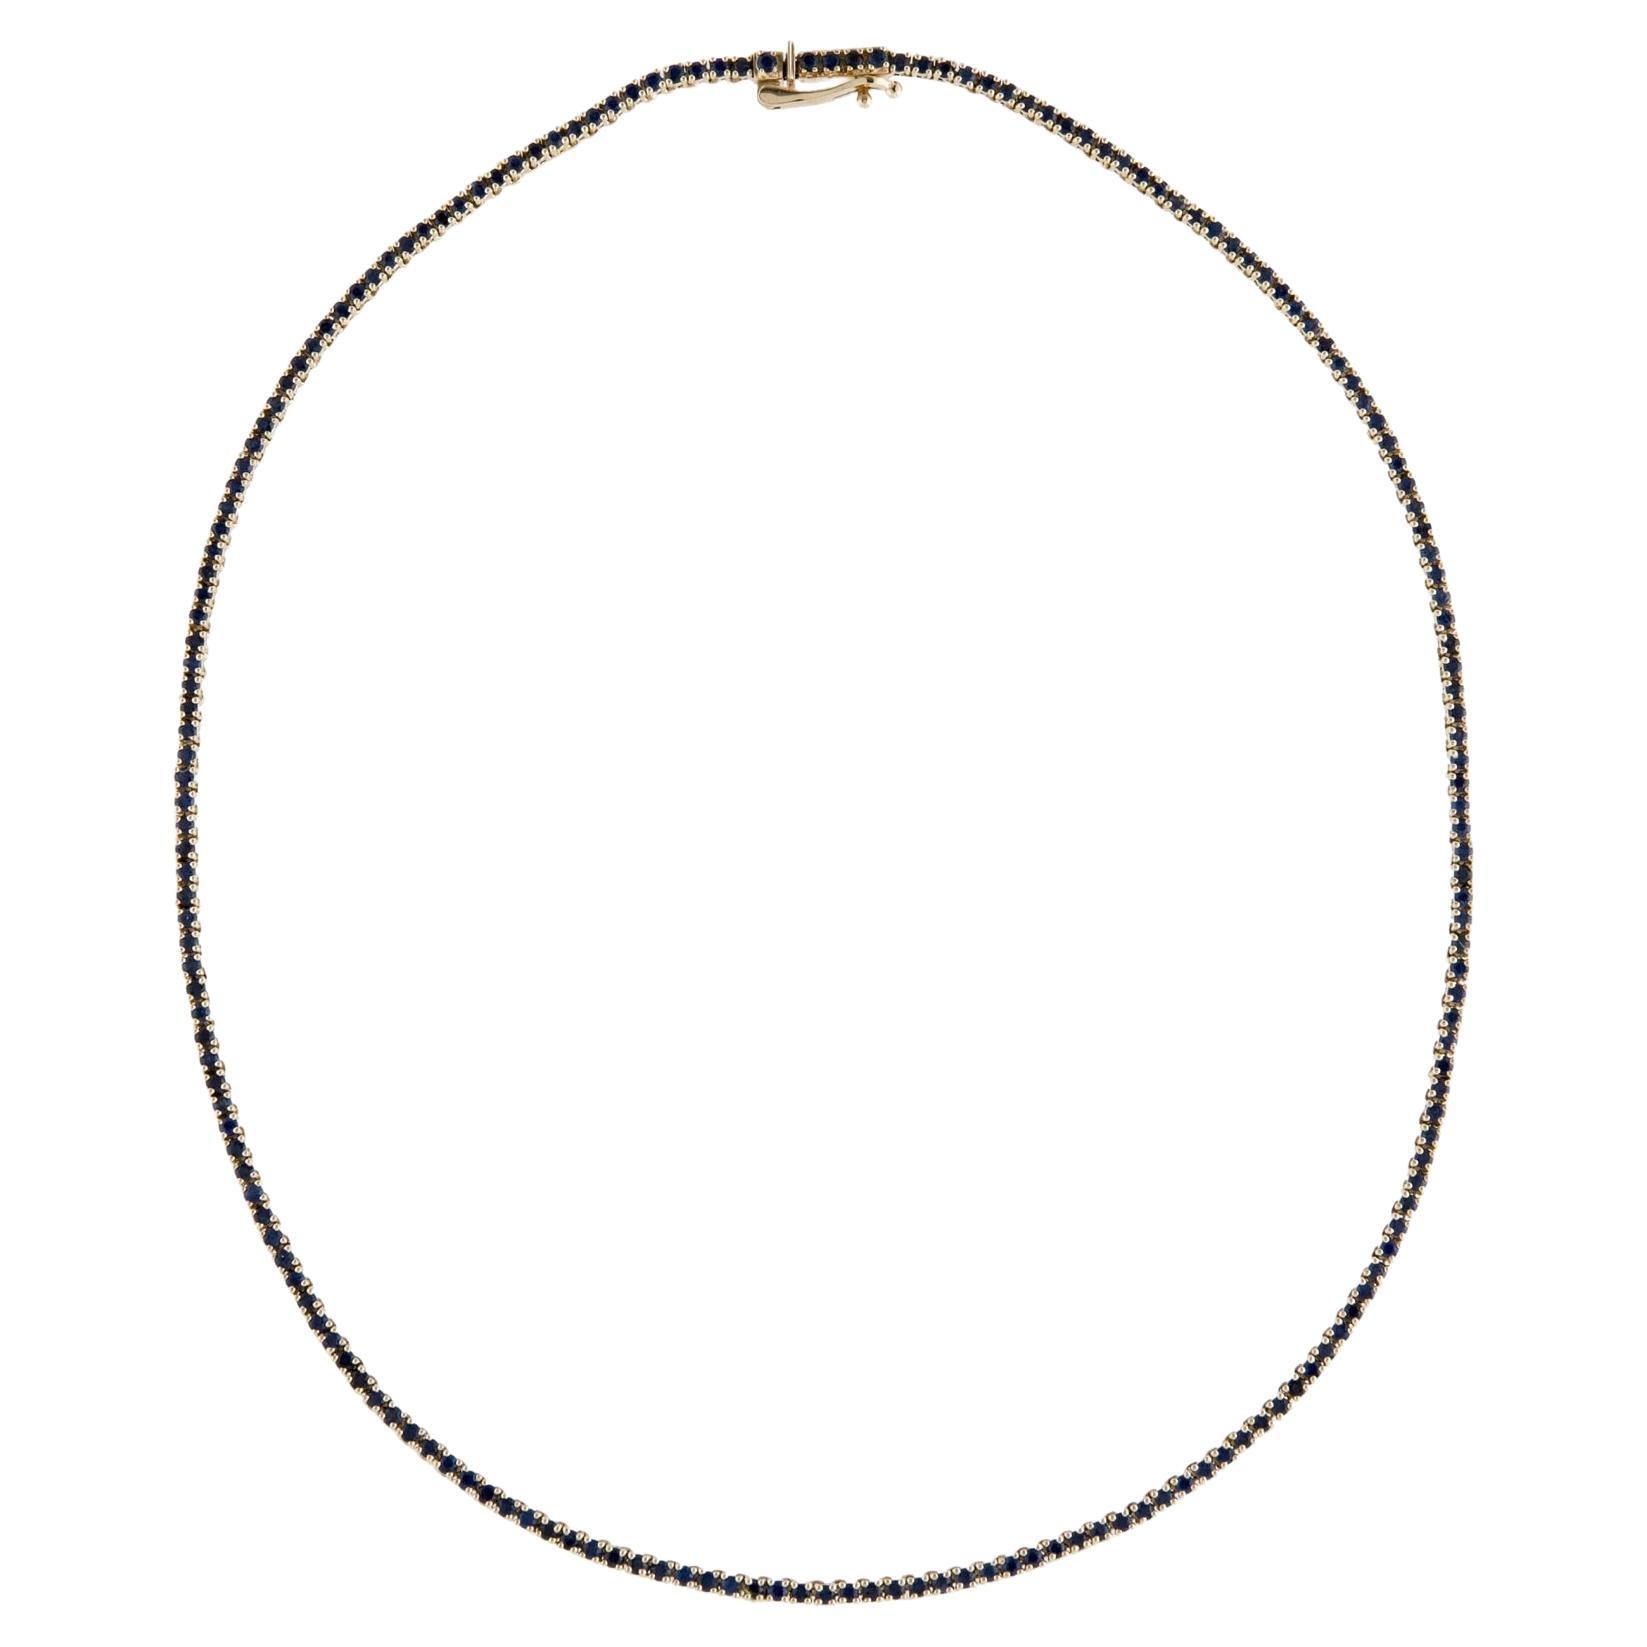 Exquisite 14K Sapphire Chain Necklace - Elegant Gemstone Statement Jewelry For Sale